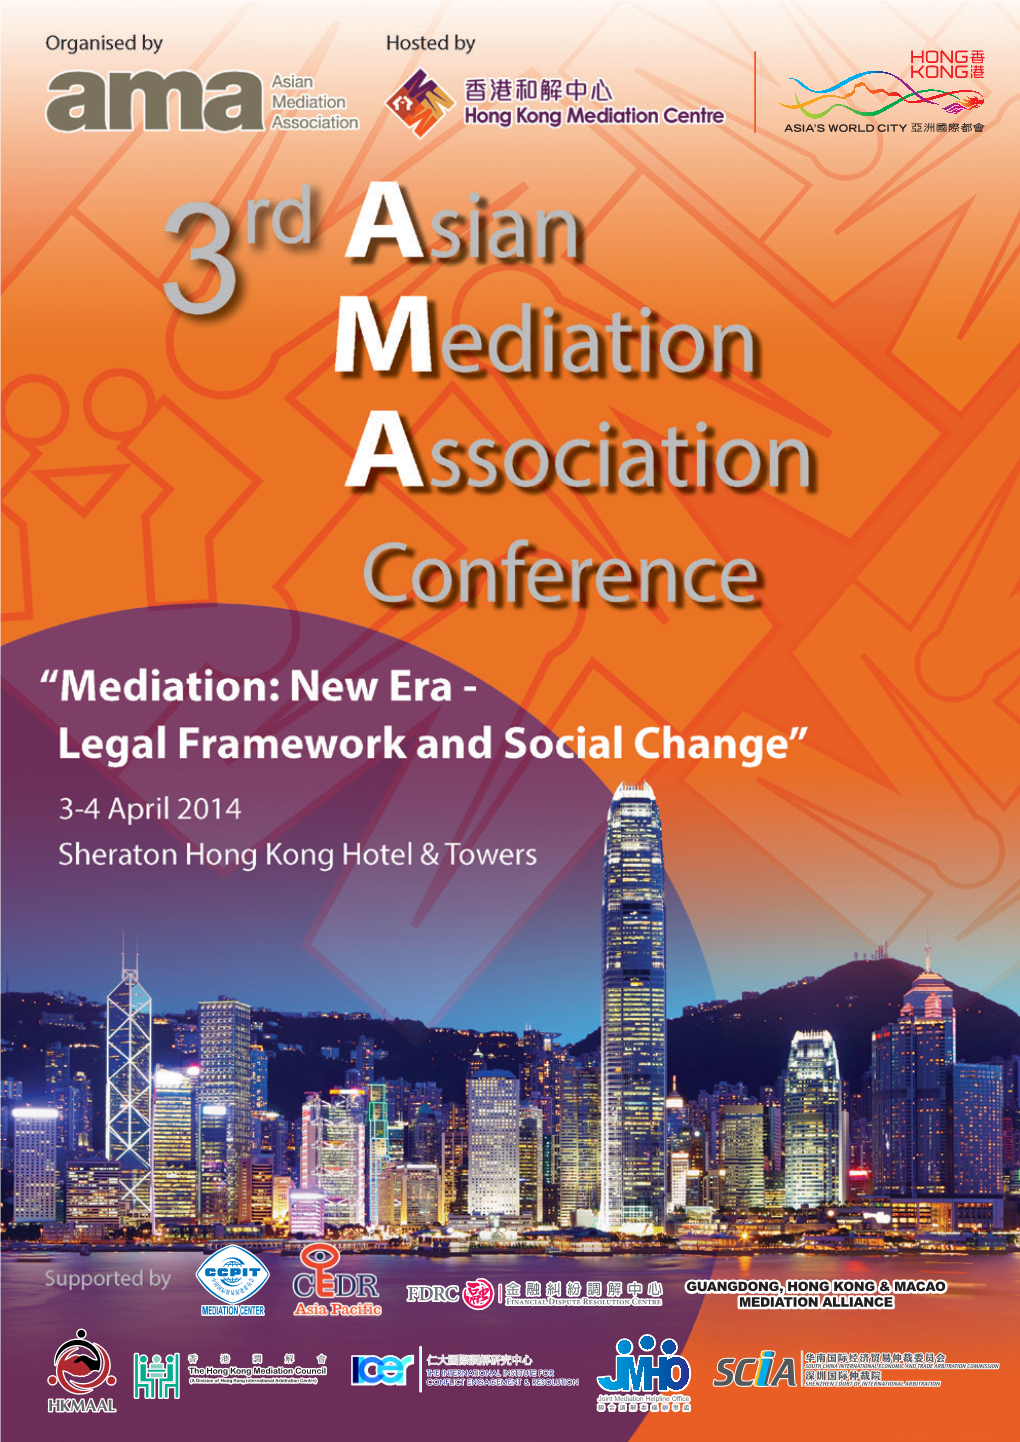 Guangdong, Hong Kong & Macao Mediation Alliance